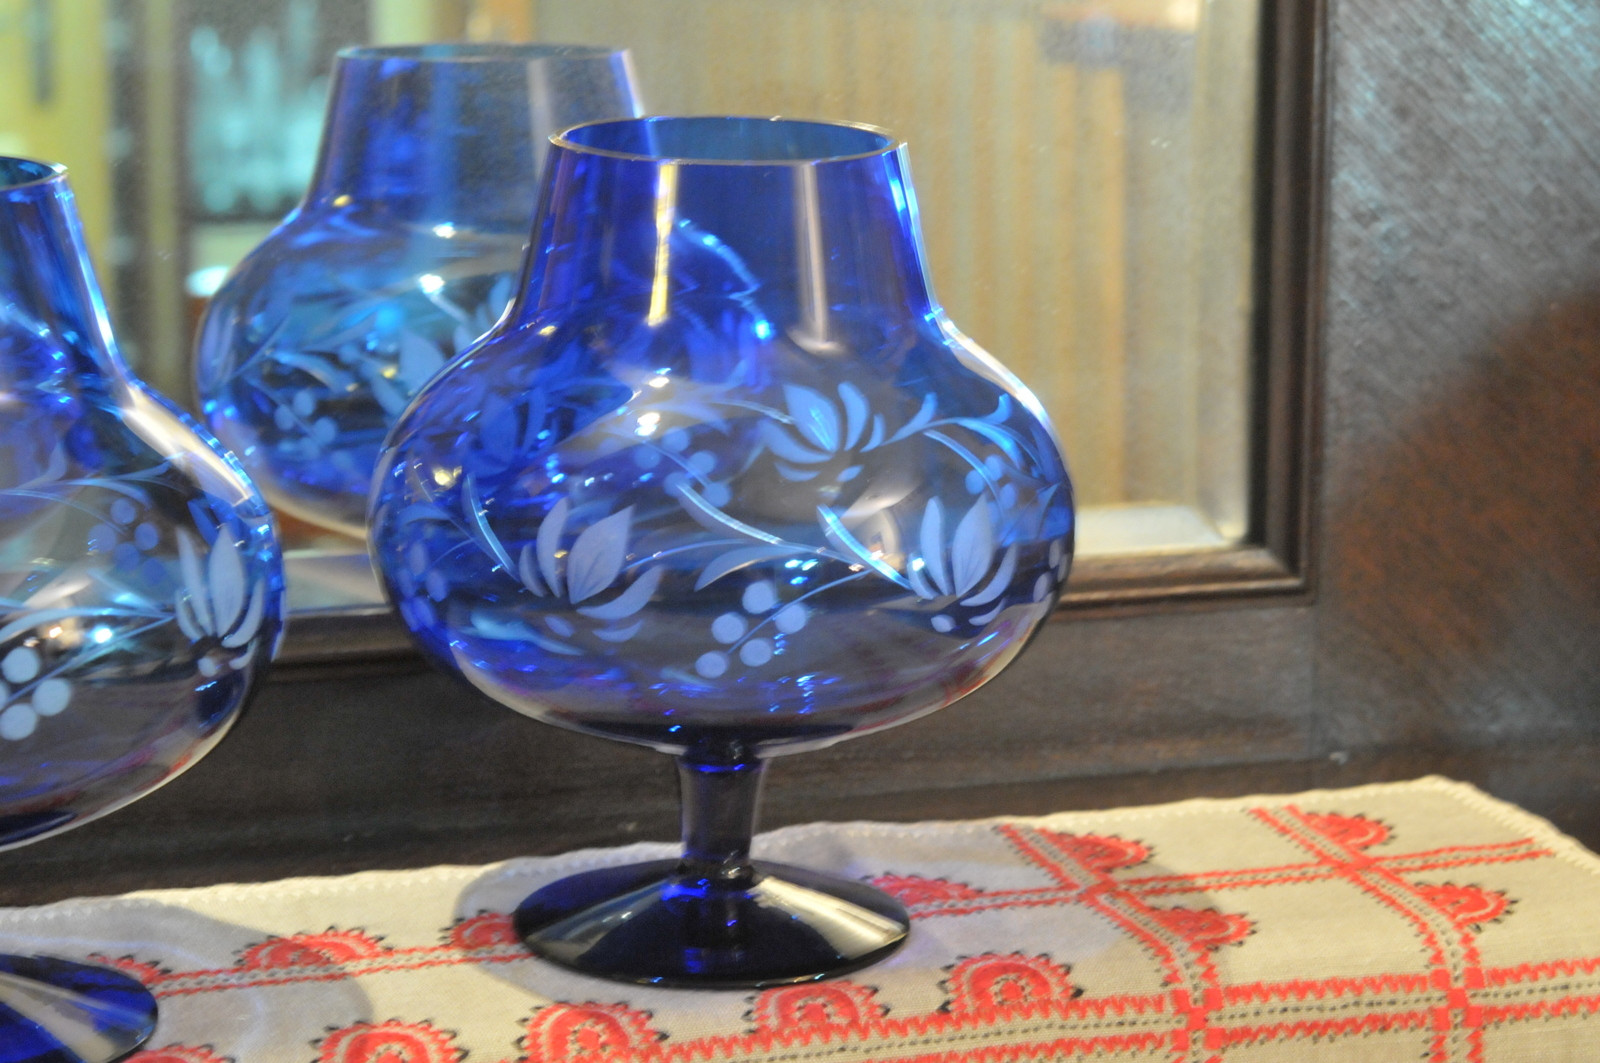 hoya crystal vase of 2 dua¼e kielichy art glass szkao kobaltowe szlif 7028895621 with regard to 2 dua¼e kielichy art glass szkao kobaltowe szlif 7028895621 allegro pl wiacej nia¼ aukcje